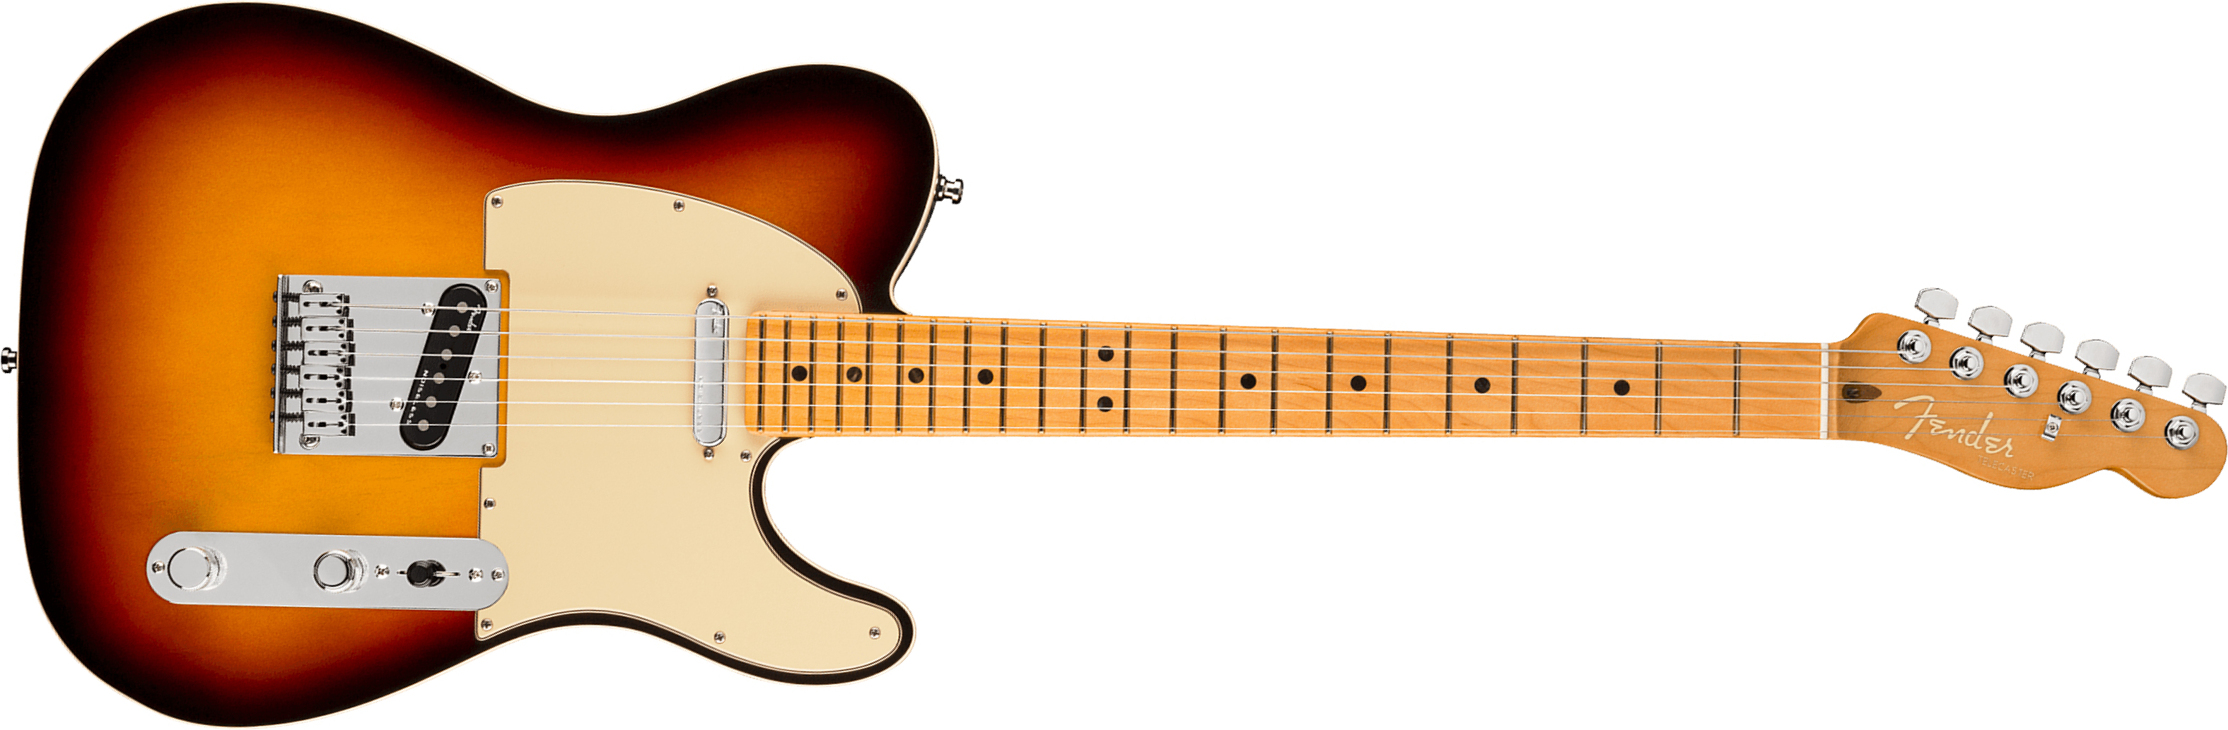 Fender Tele American Ultra 2019 Usa Mn - Ultraburst - Guitarra eléctrica con forma de tel - Main picture